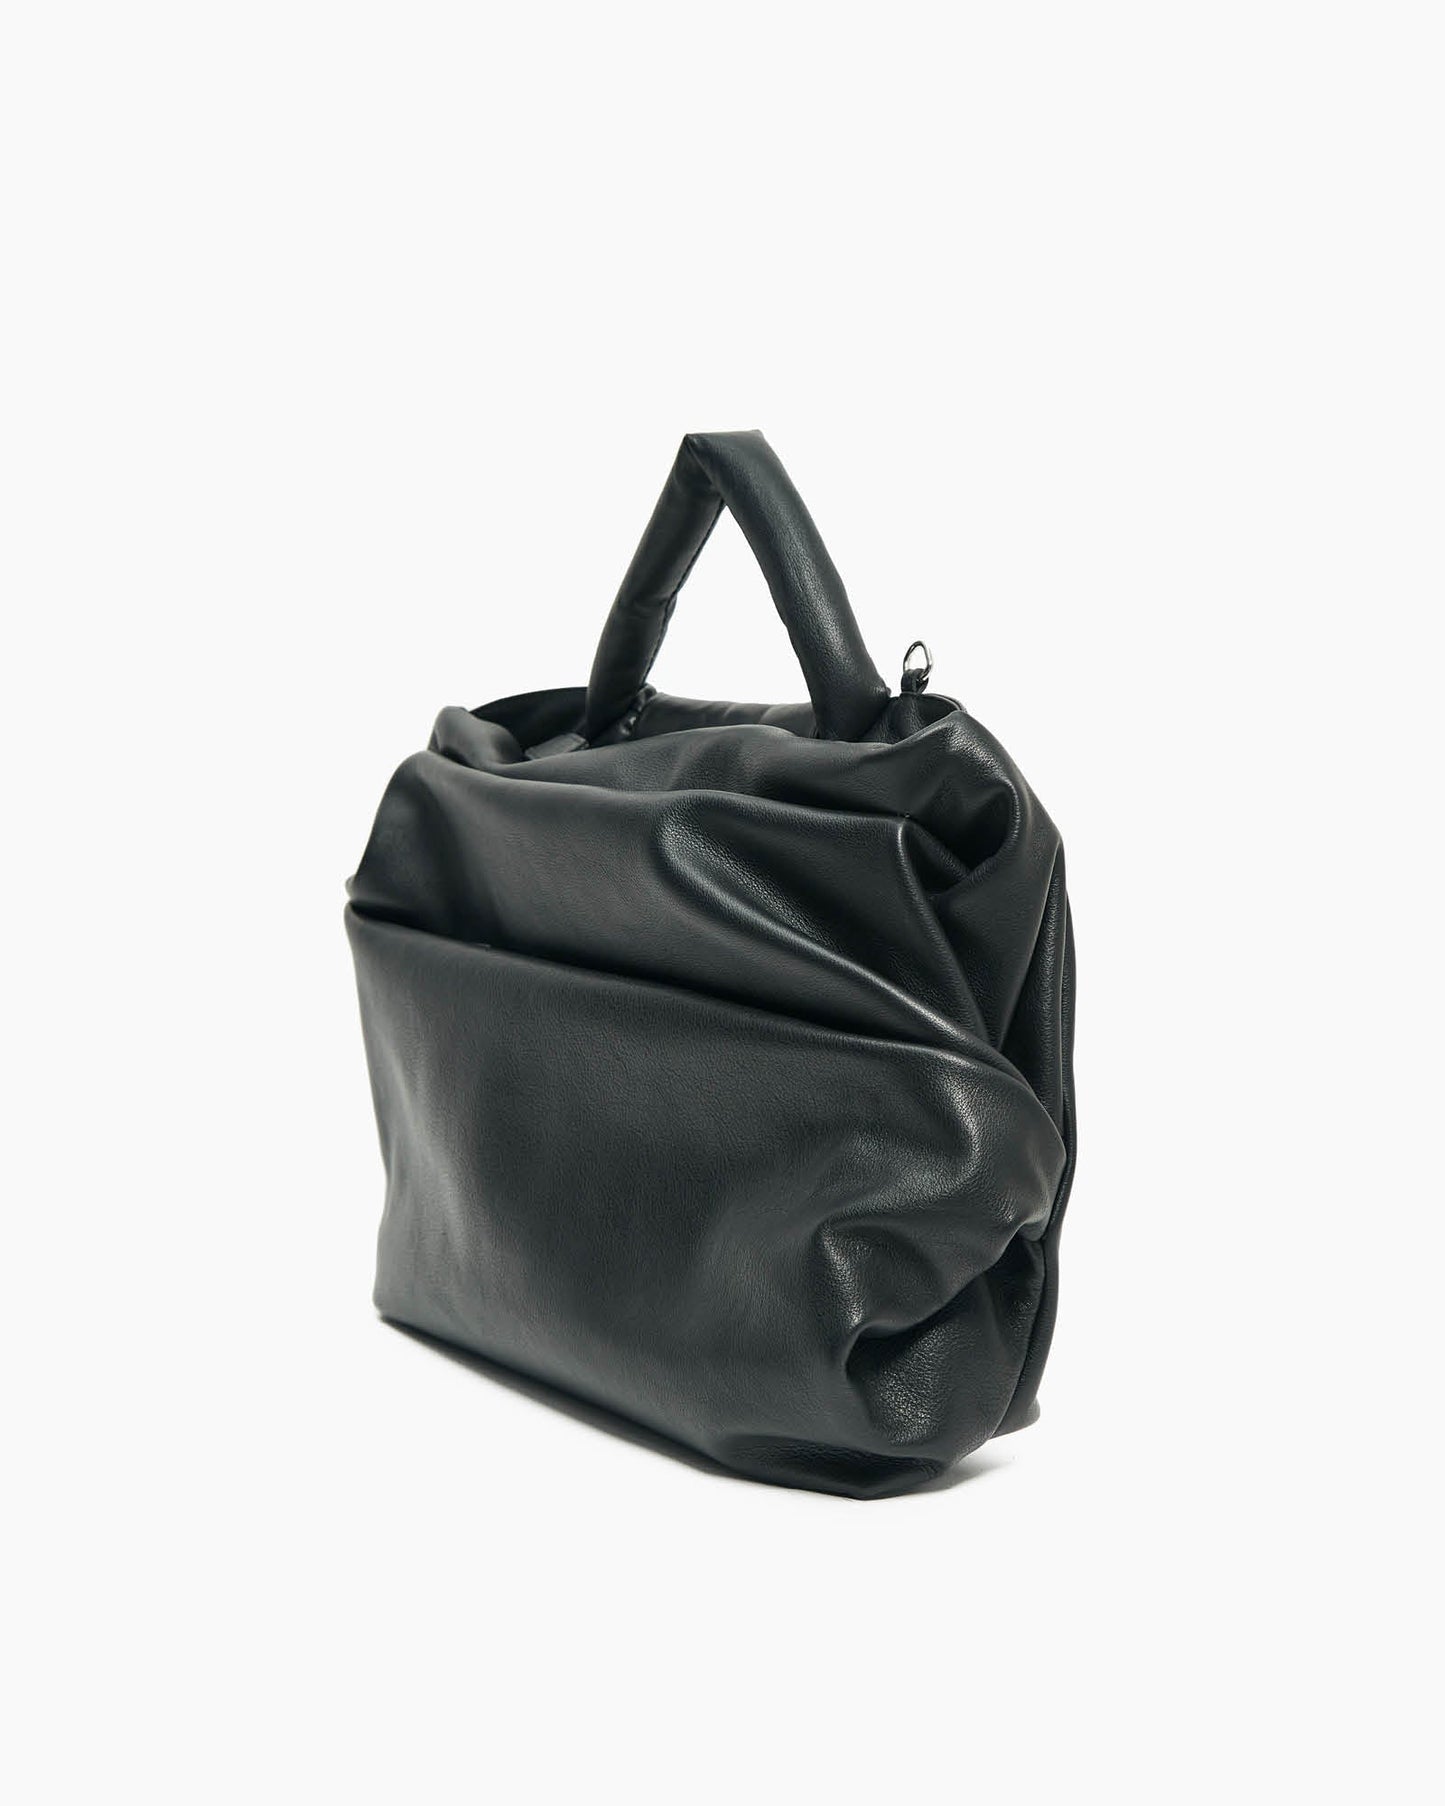 Soft padded leather handbag